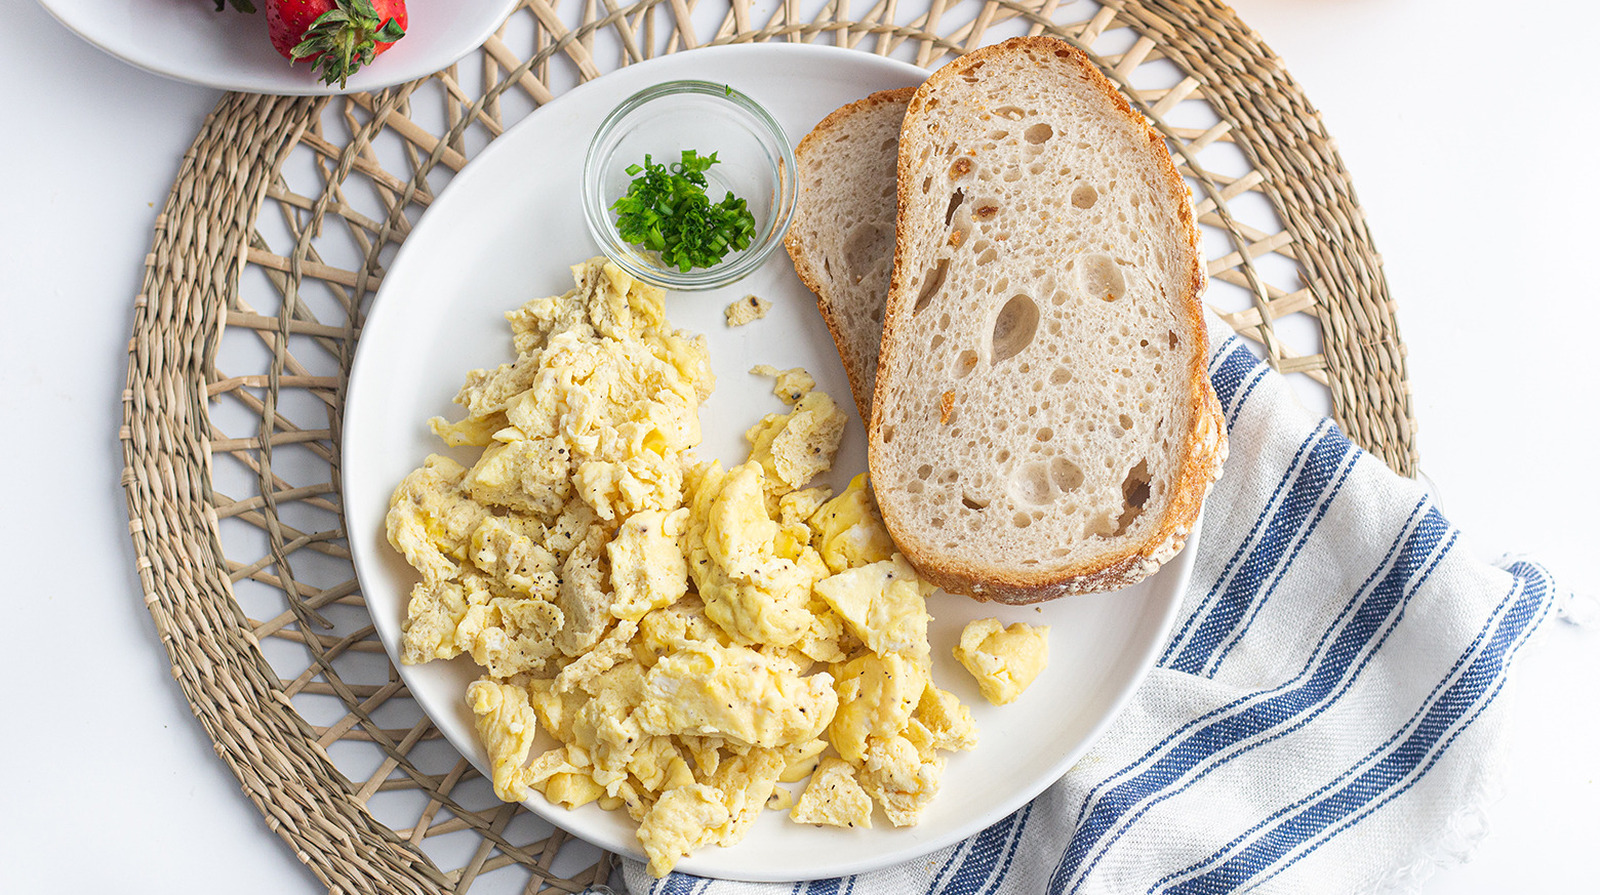 https://www.mashed.com/img/gallery/microwave-scrambled-eggs-recipe/l-intro-1624991507.jpg